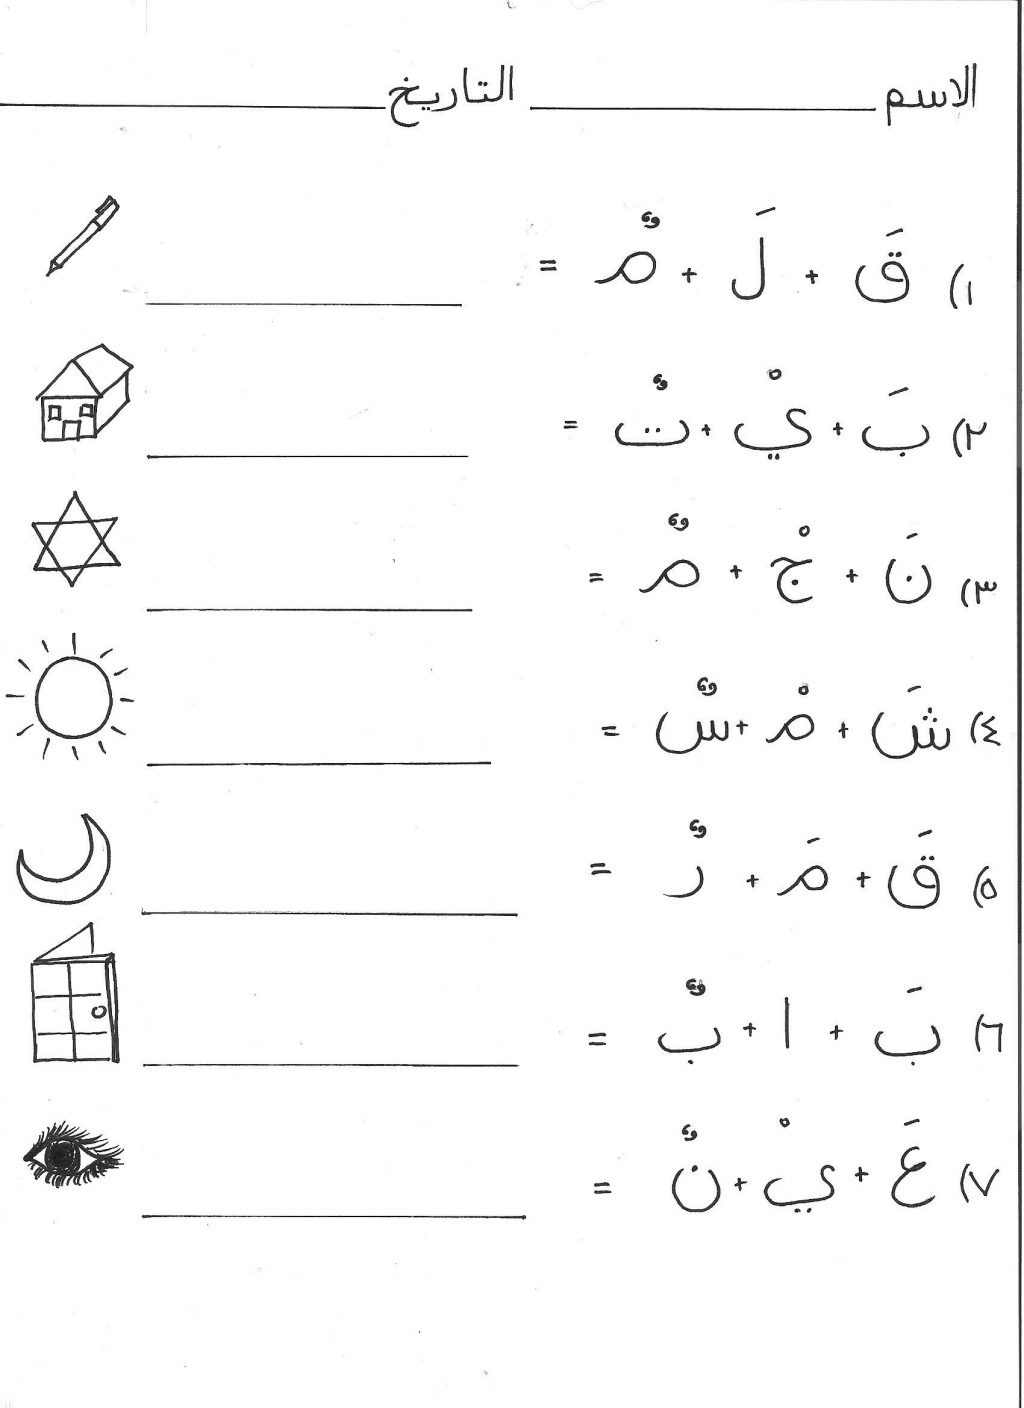 Printable Urdu Worksheets For Kindergarten Free | Chesterudell pertaining to Urdu Letters Tracing Worksheets Pdf